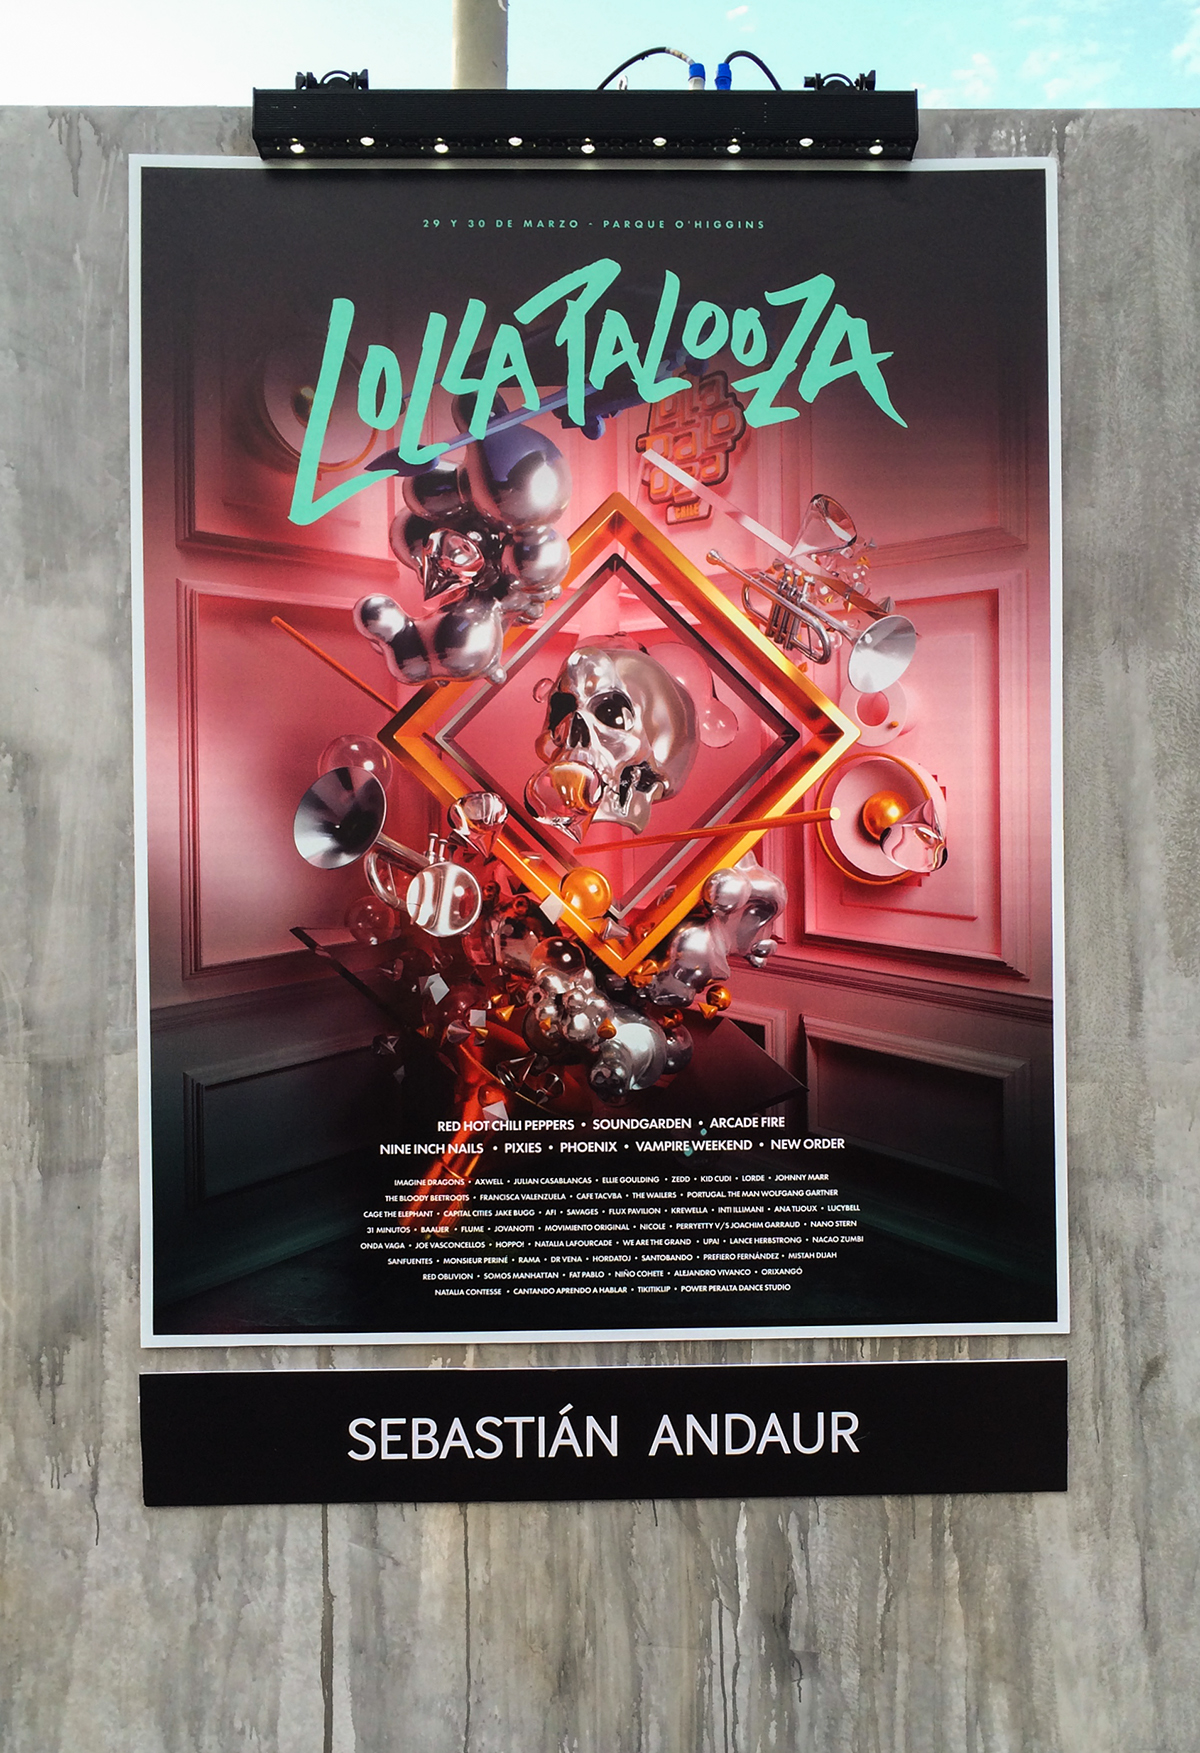 CGI vray cinema 4d lollapalooza festival Work  poster